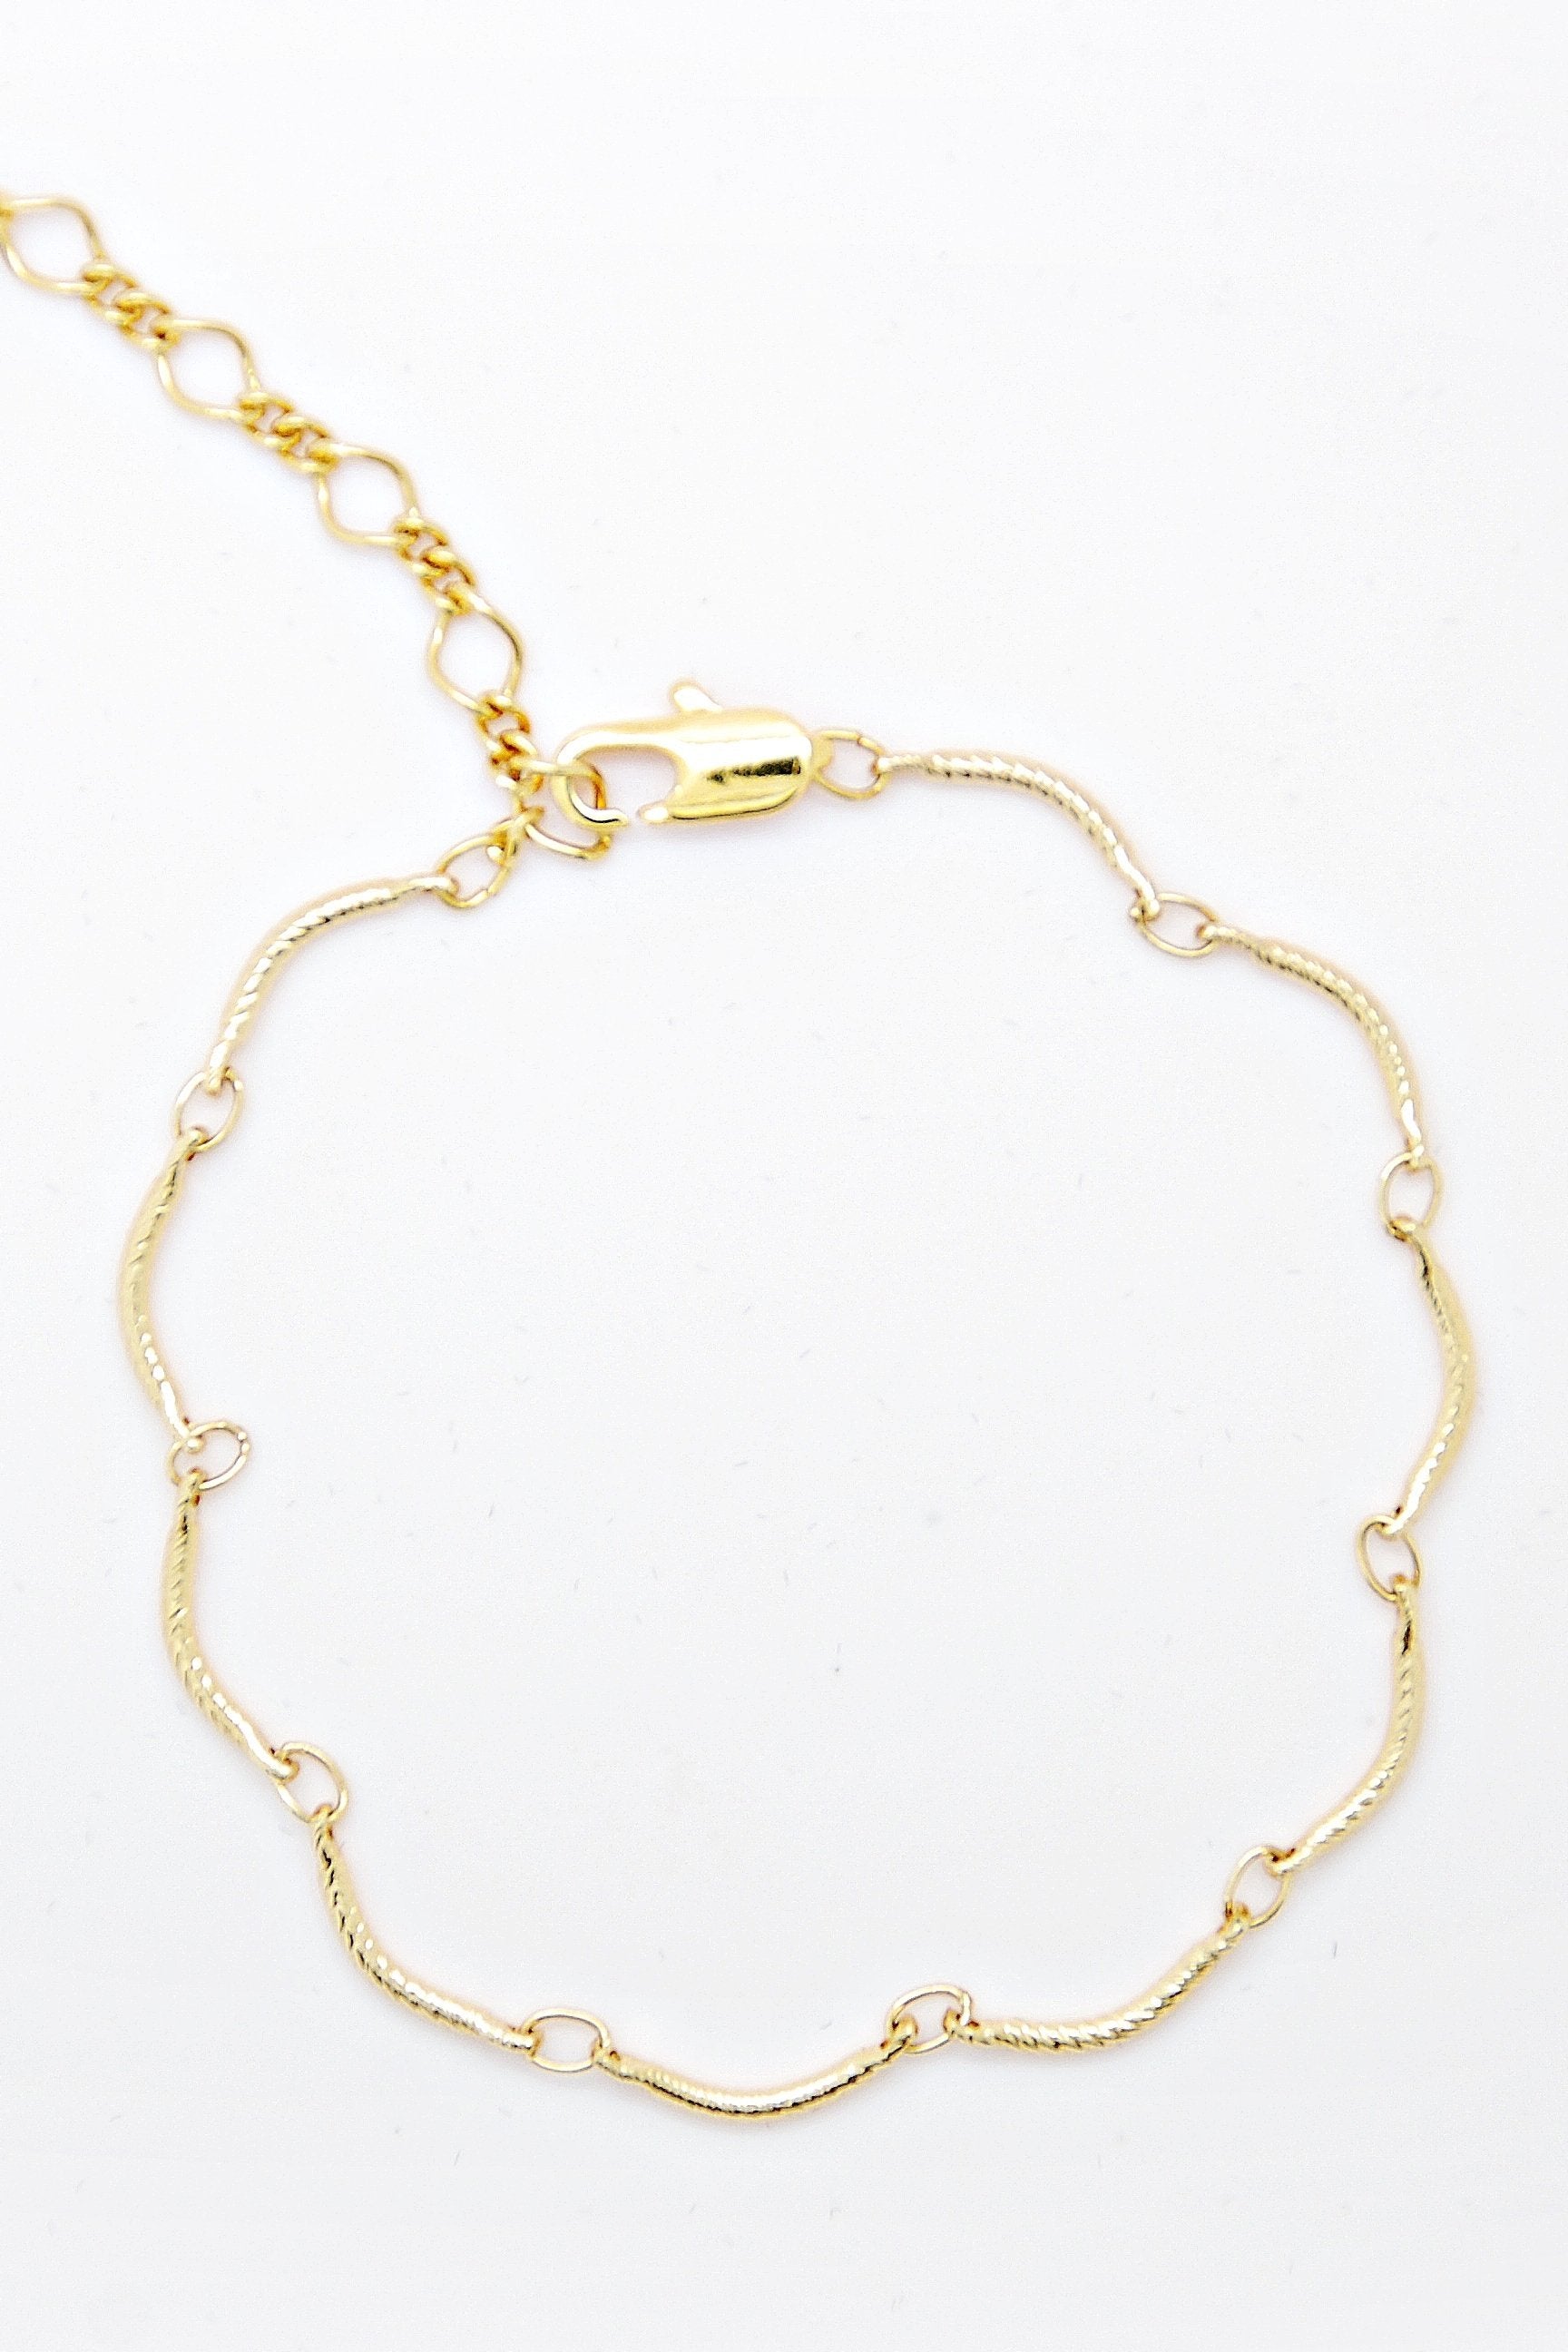 Isabella - Vintage Chain bracelet - Boutique Minimaliste has waterproof, durable, elegant and vintage inspired jewelry